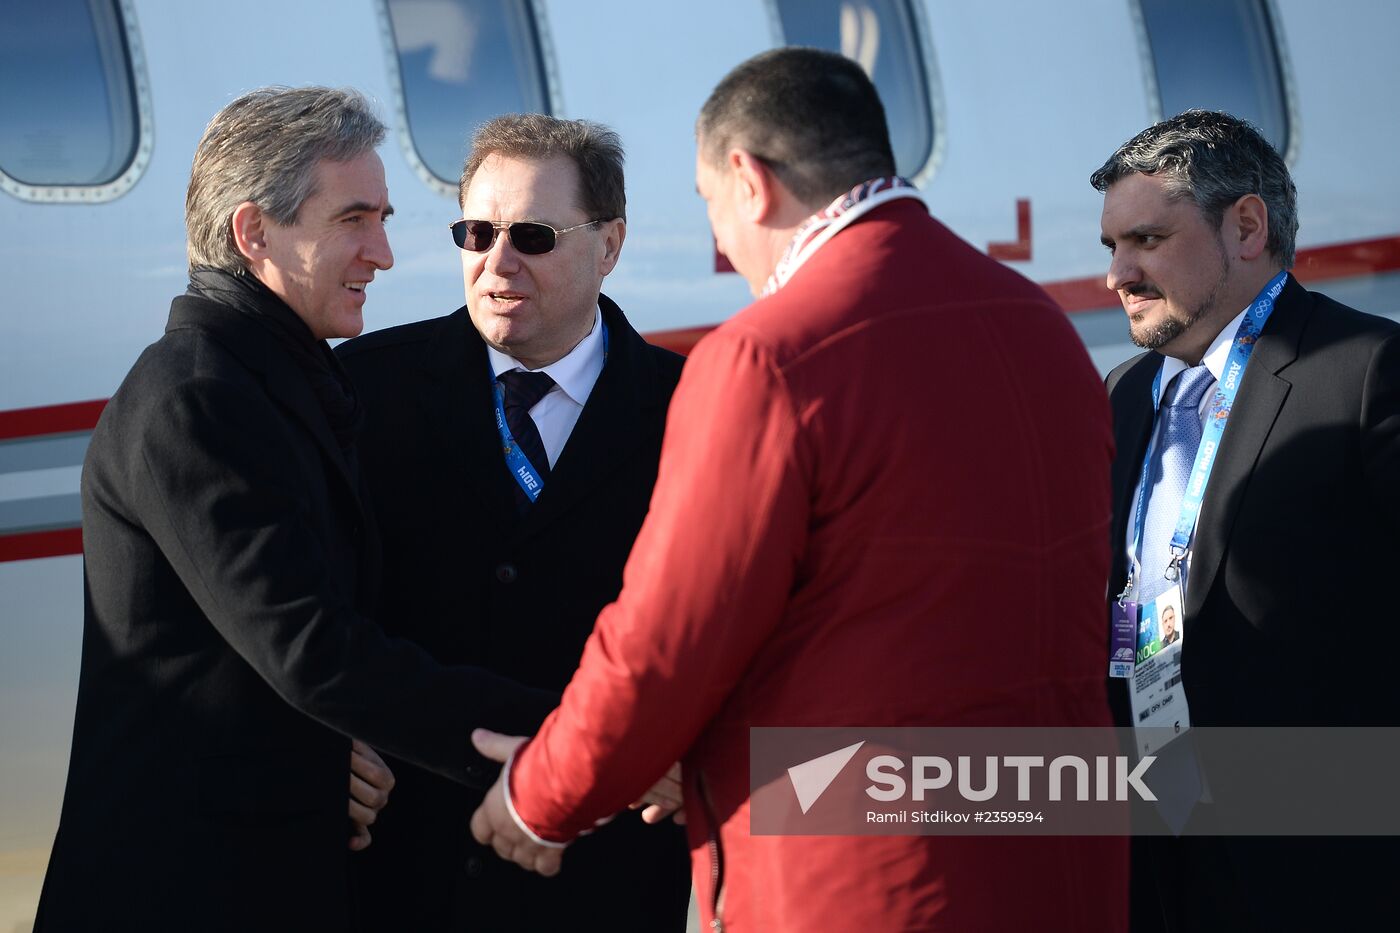 Heads of state arrive in Sochi